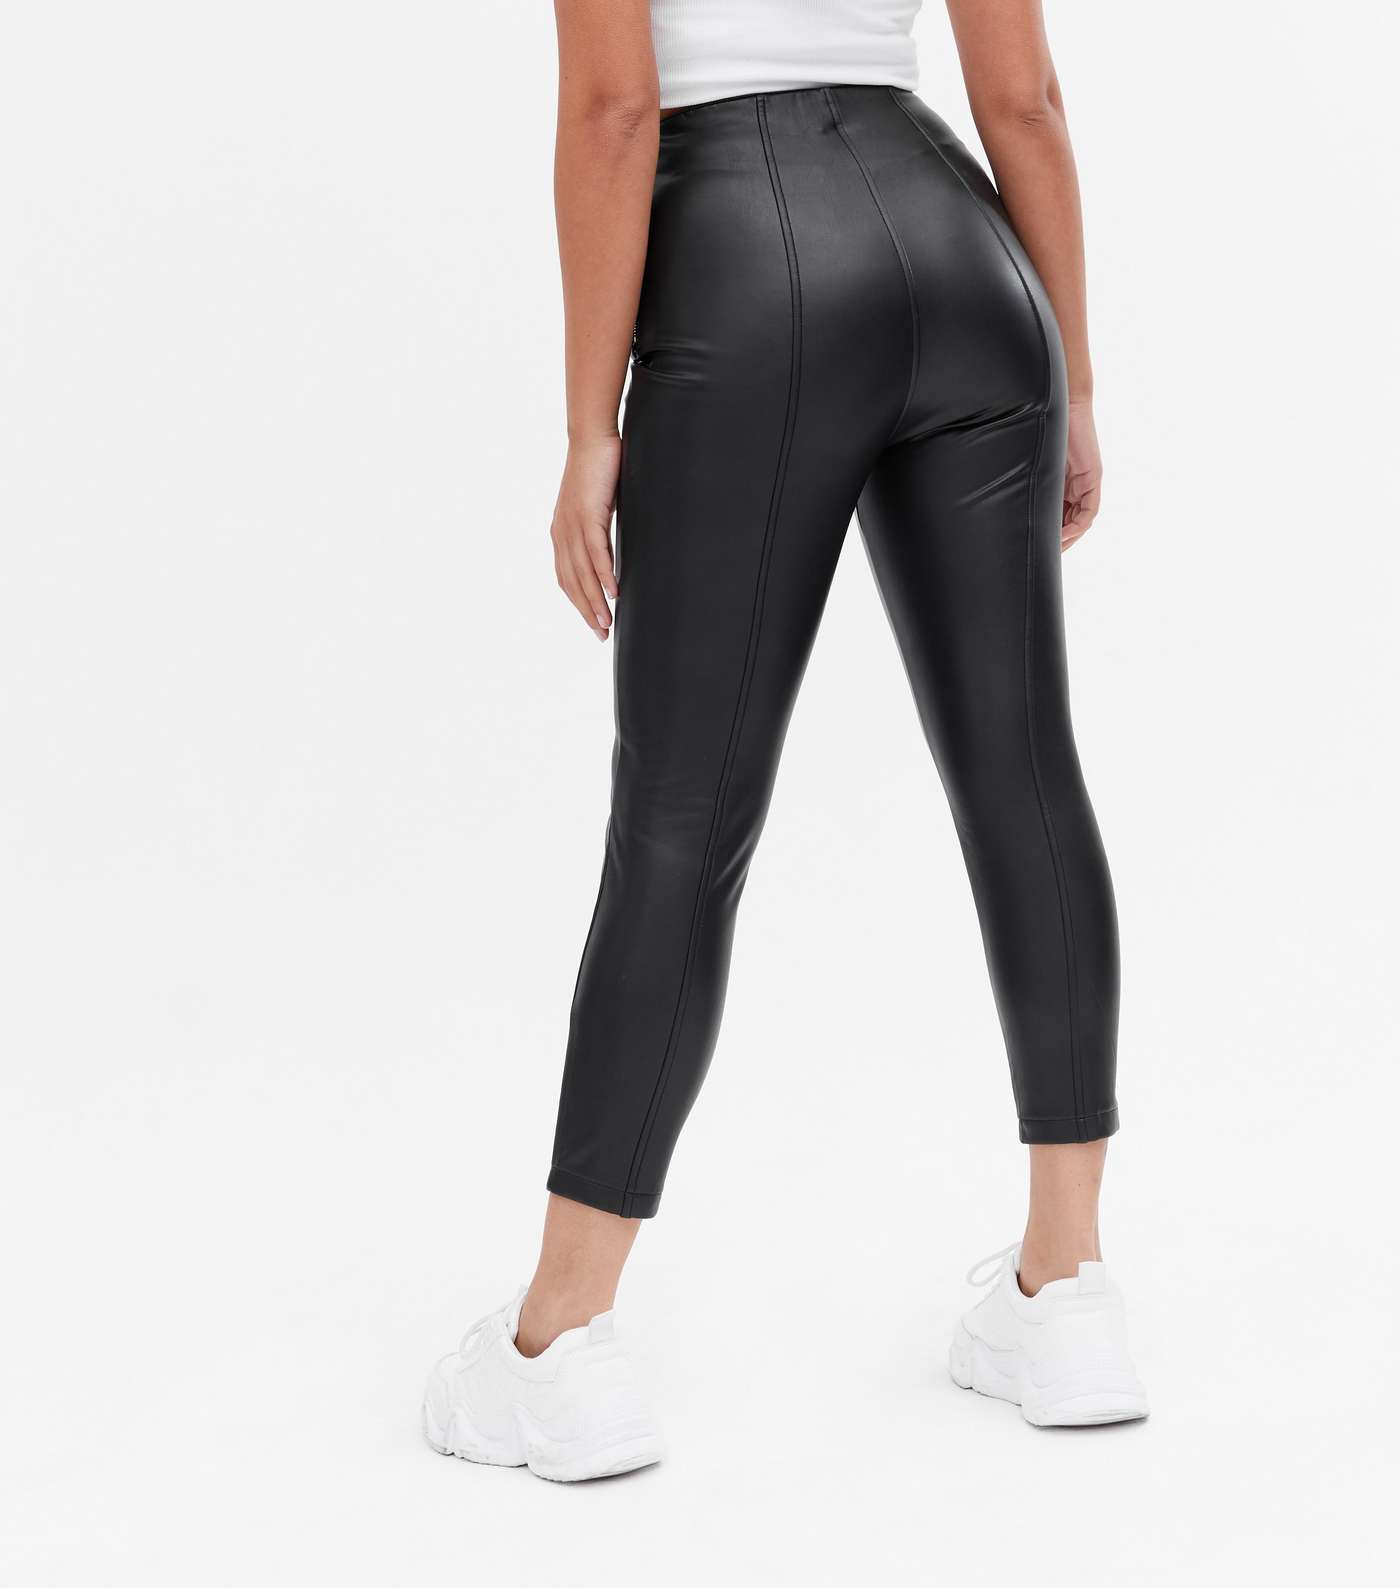 Petite Black Leather-Look High Waist Zip Short Leggings Image 4